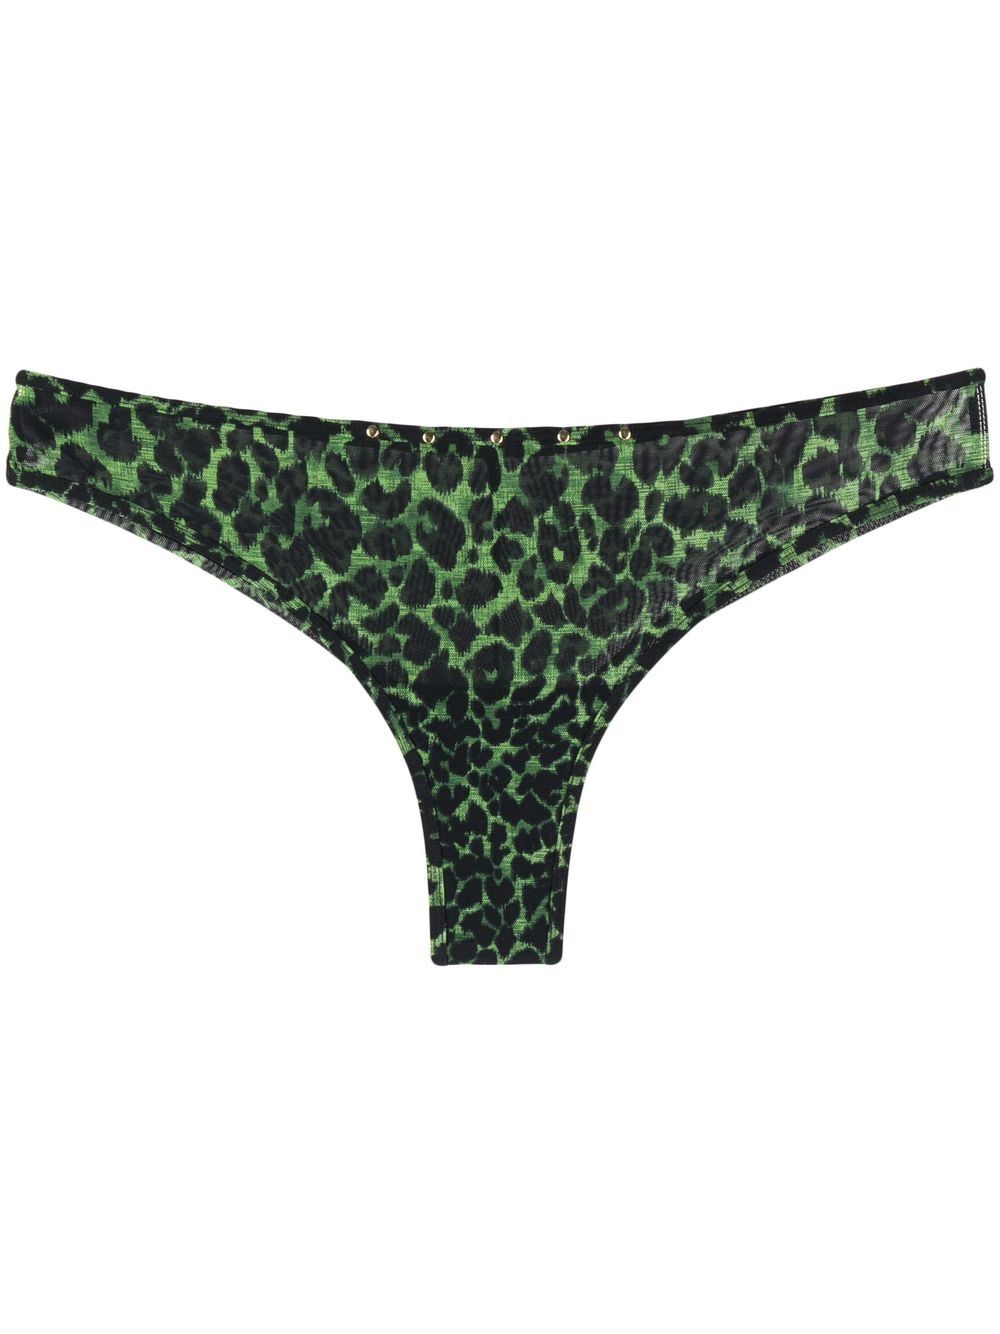 Marlies Dekkers Rhapsody leopard print briefs - Green von Marlies Dekkers